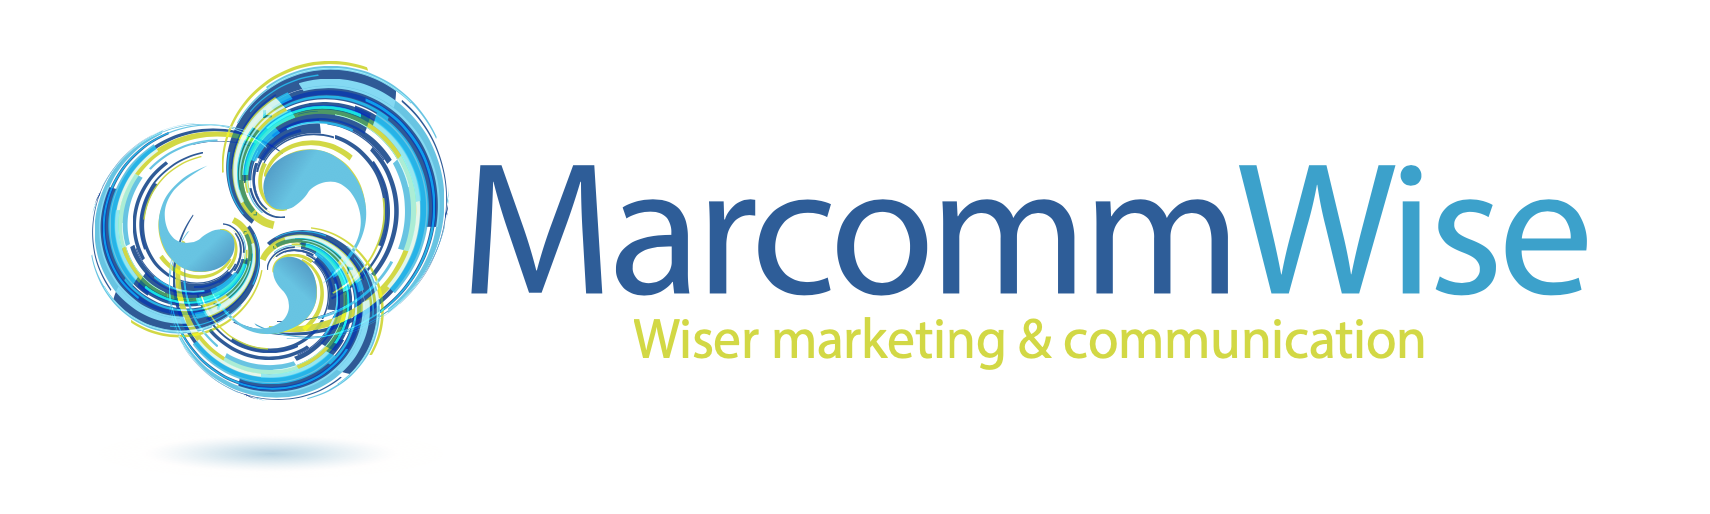 Marcommwise.com – 